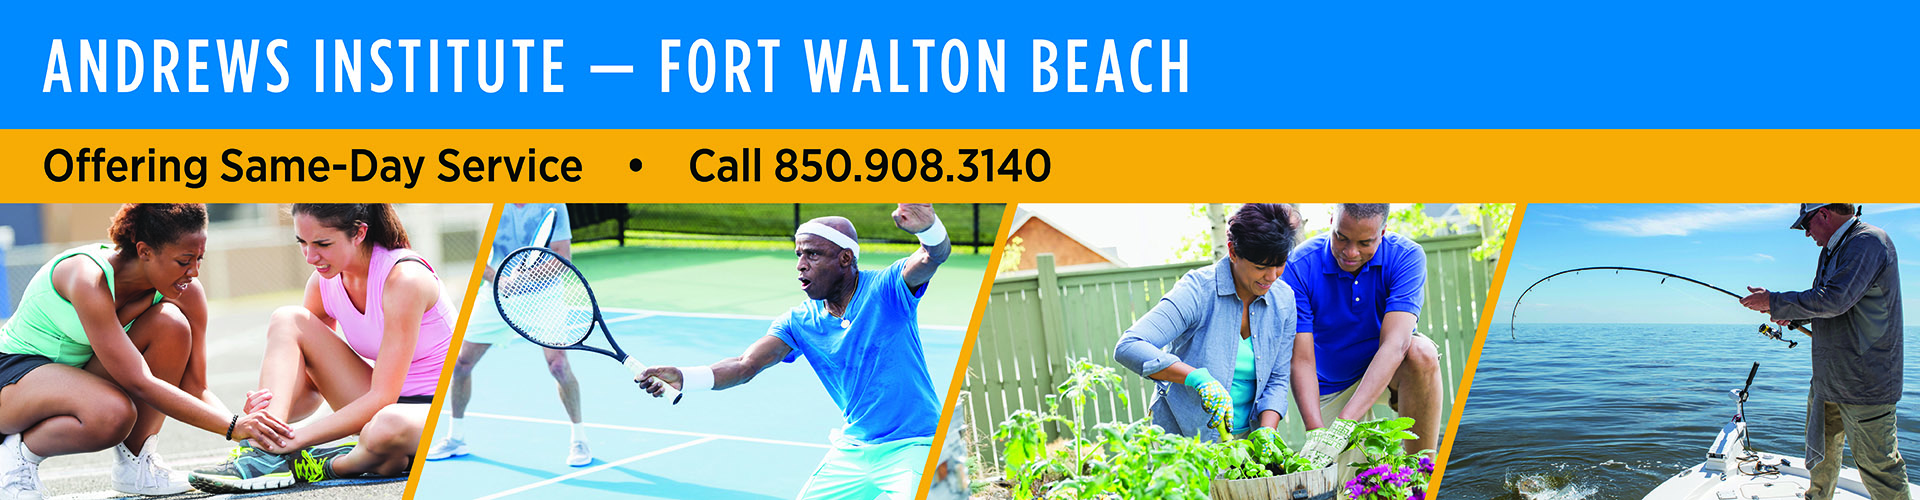 Fort Walton Beach - Same-Day Orthopedic Care - Call 850-908-3140